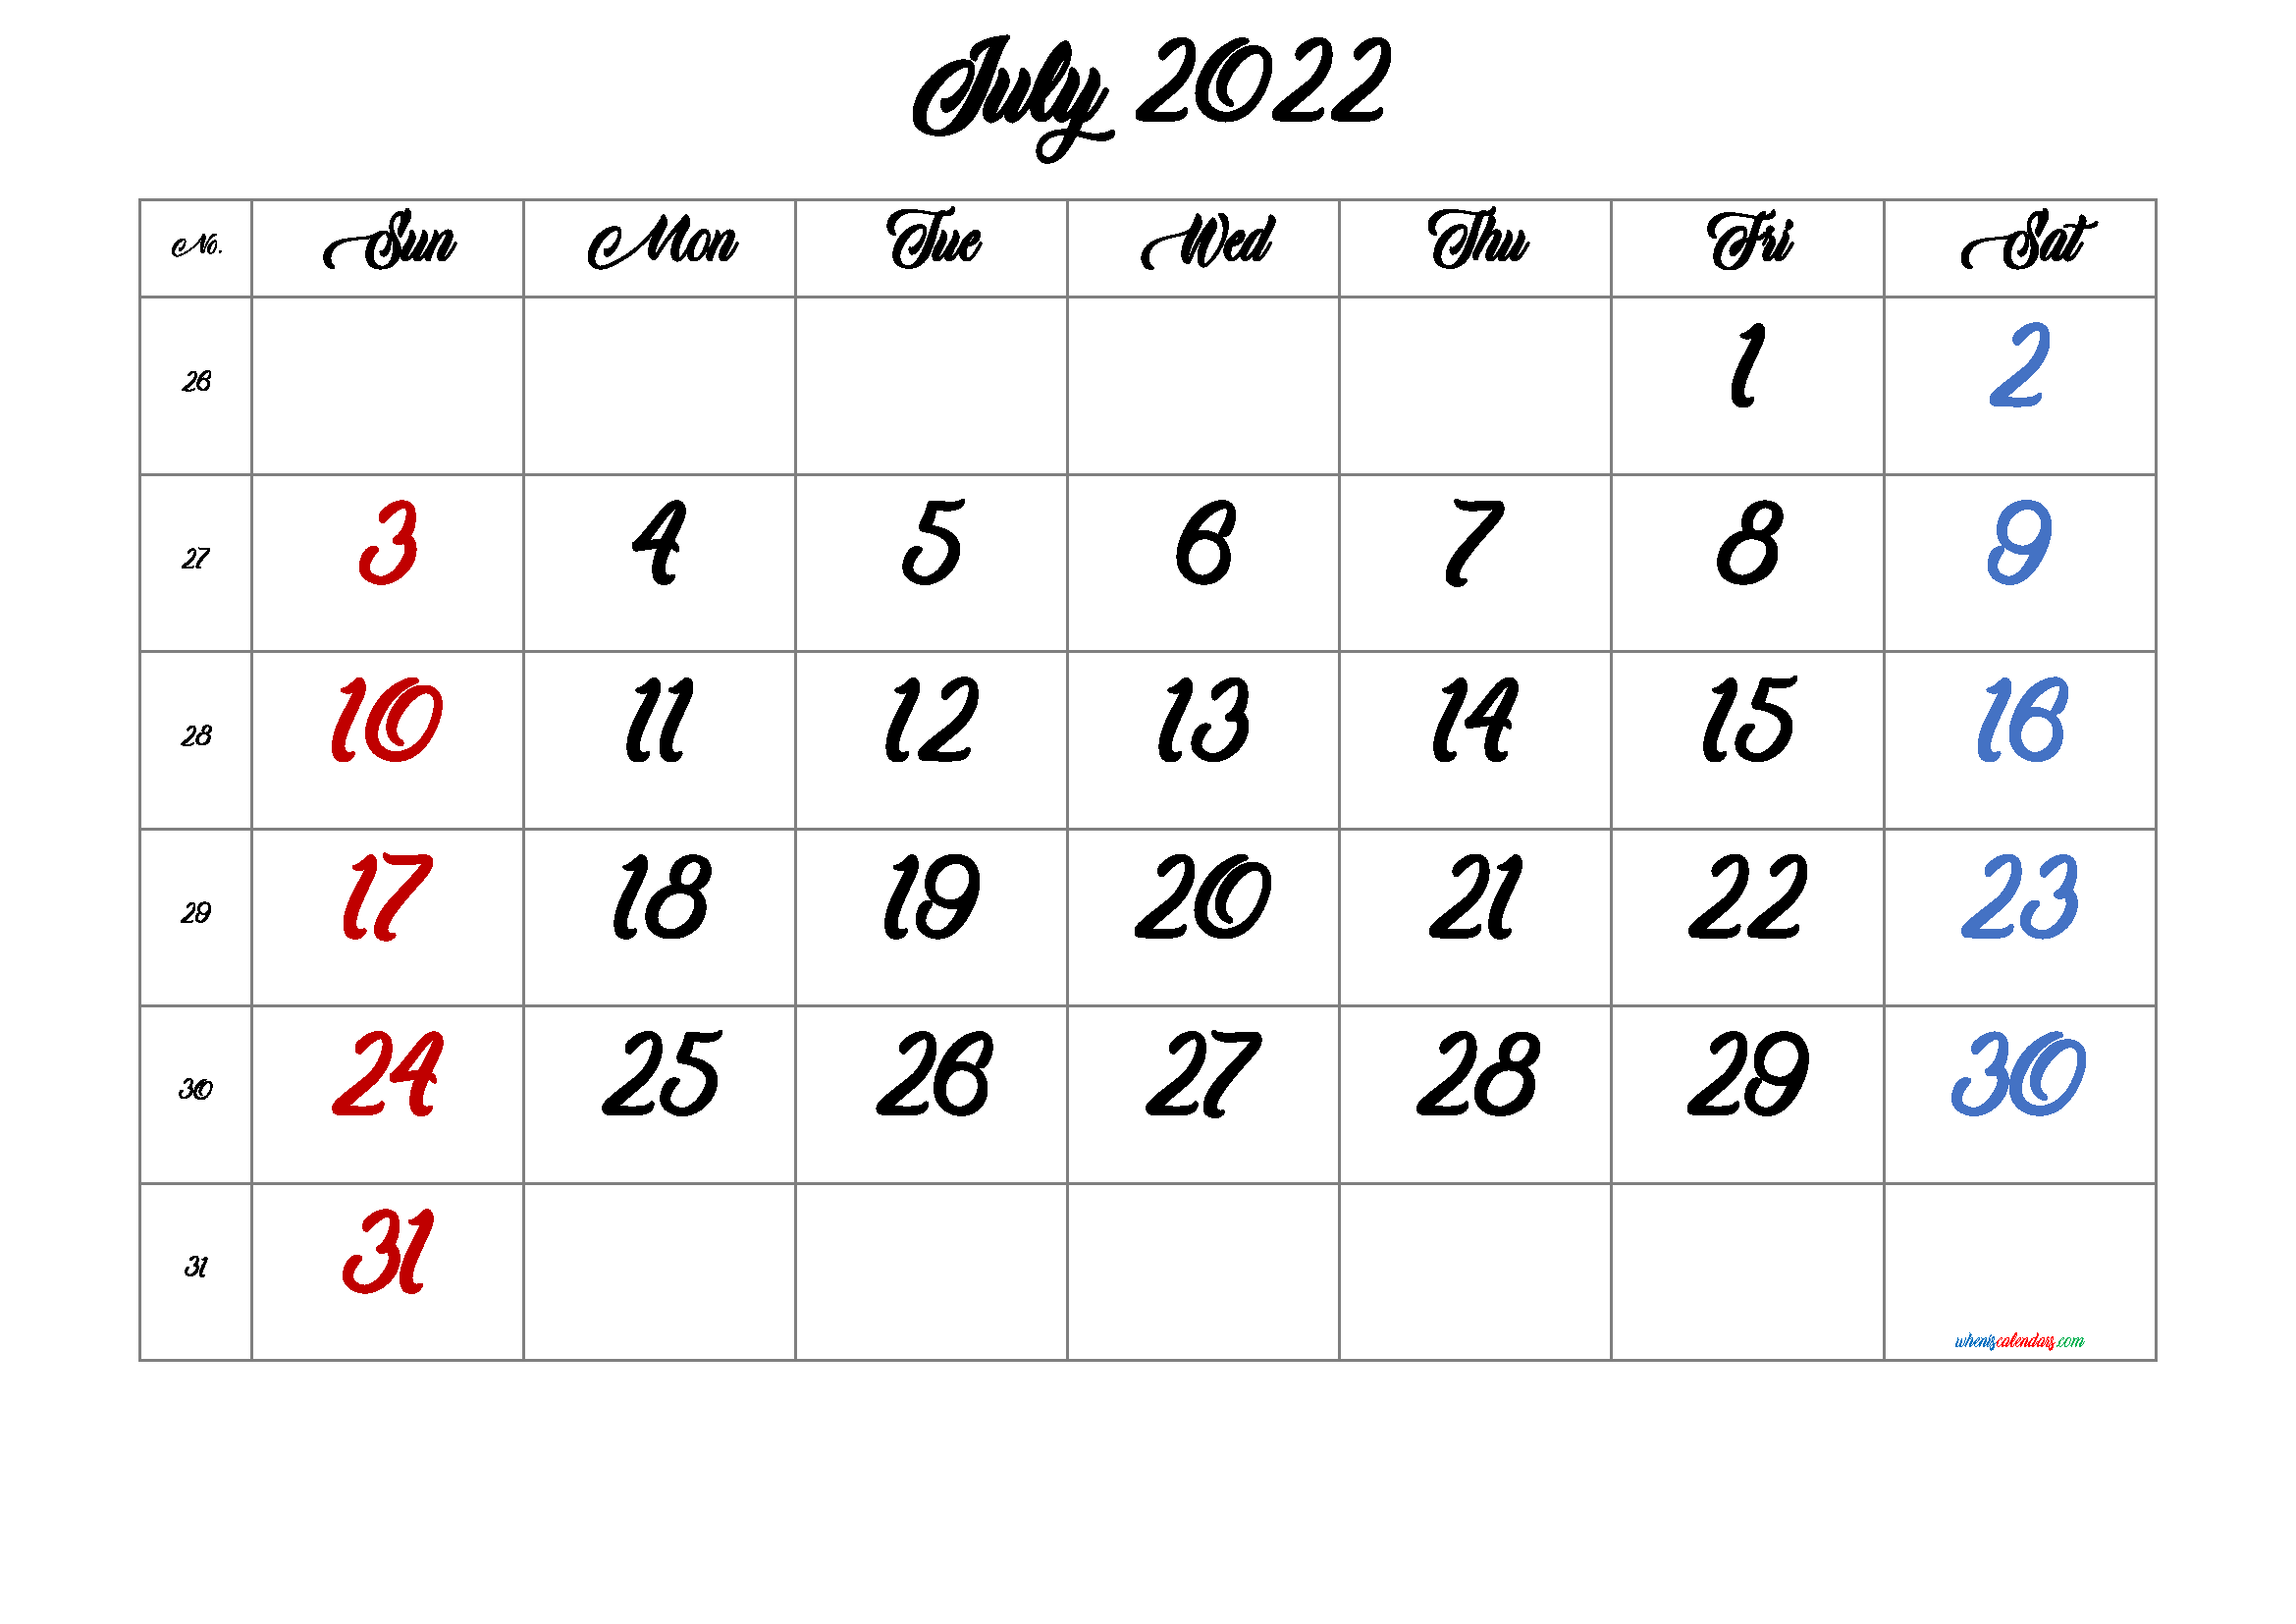 Free July 2022 Calendar Cute